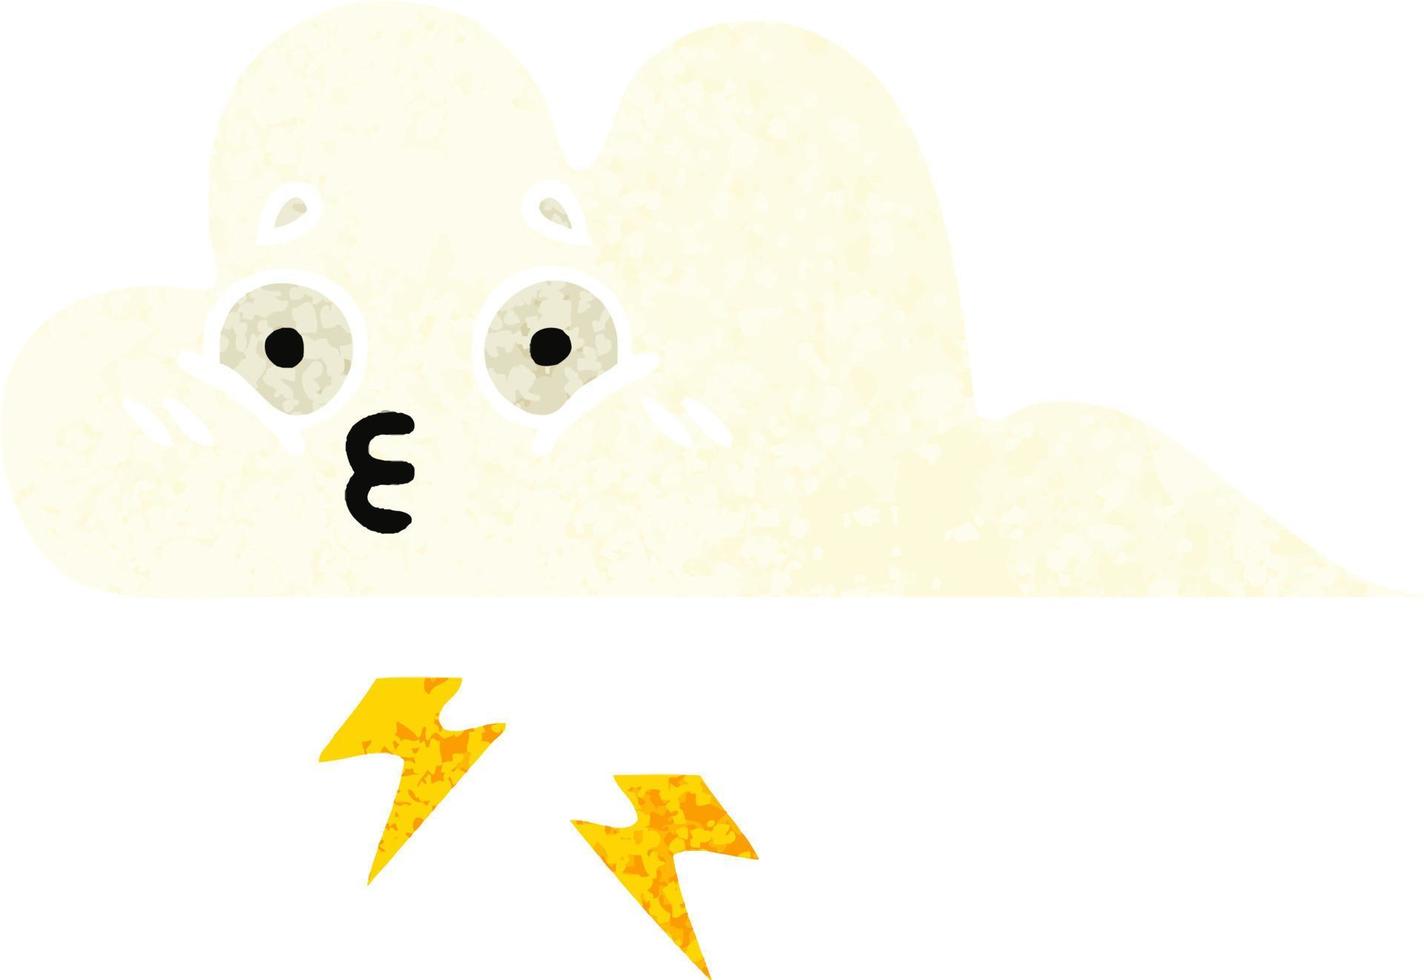 retro illustration style cartoon thunder cloud vector